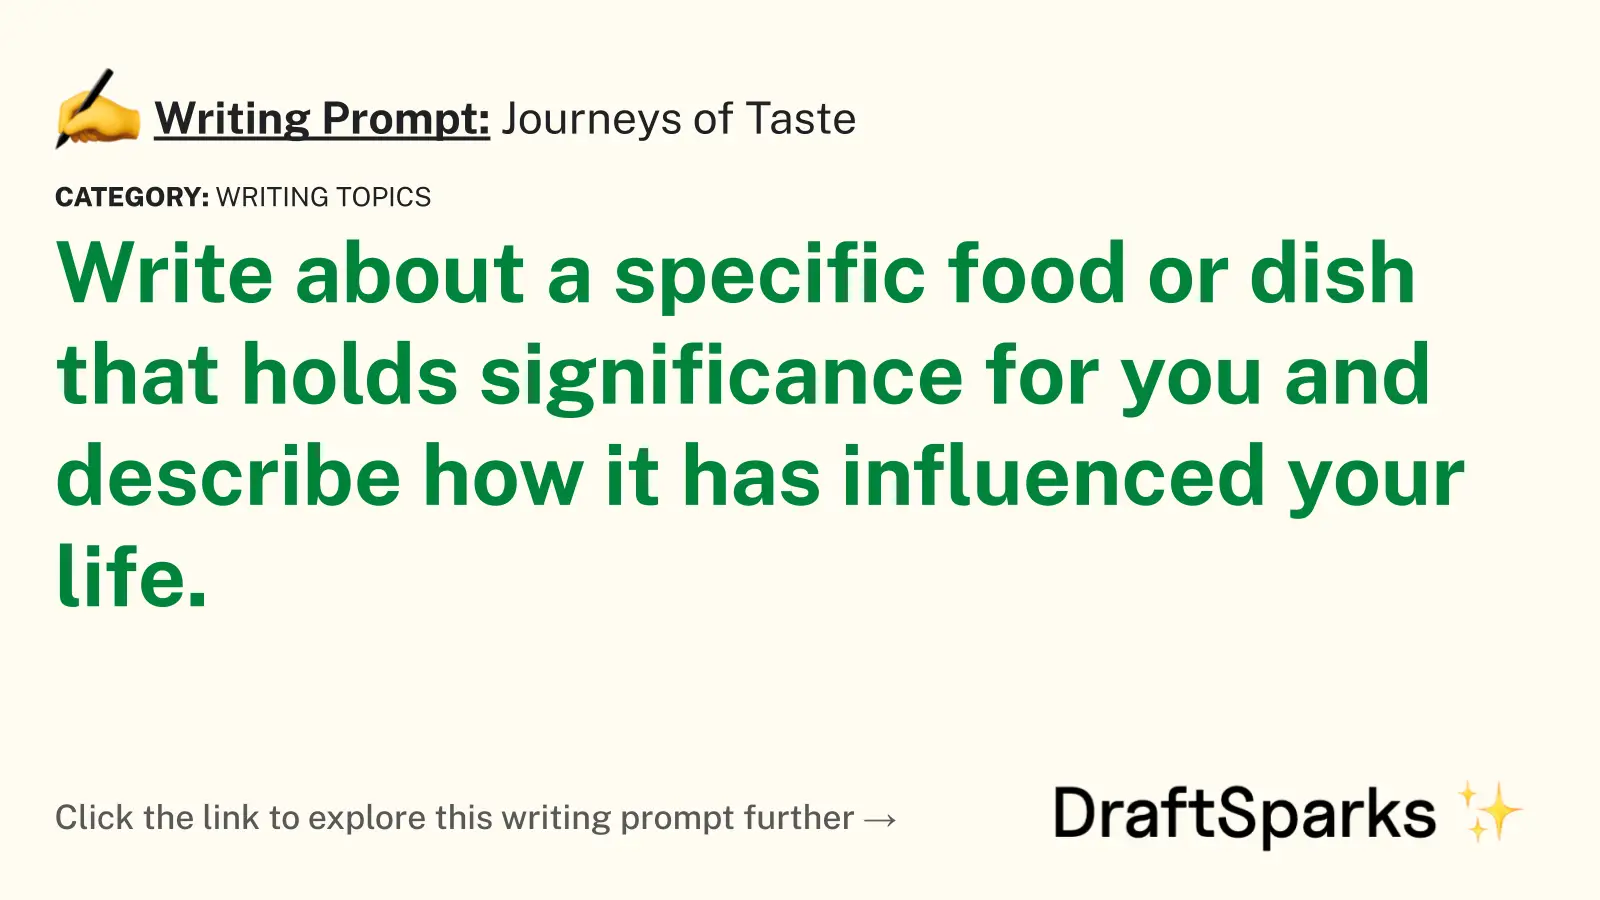 Journeys of Taste